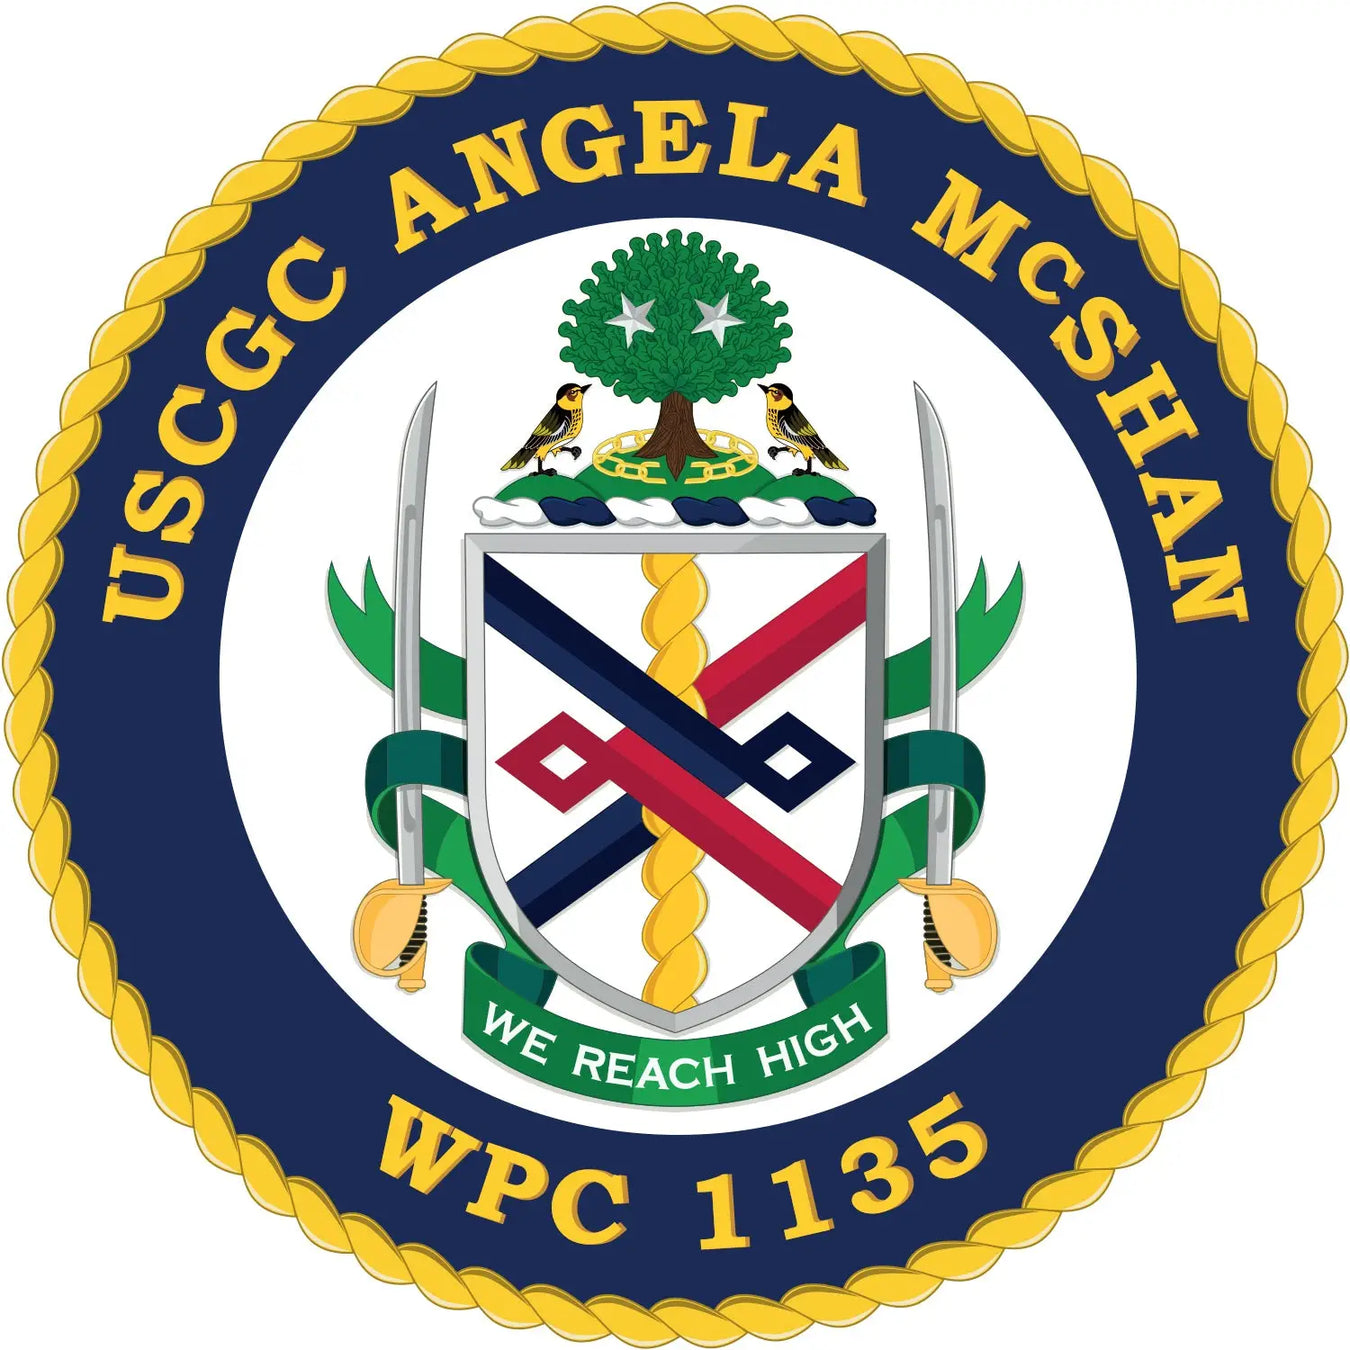 USCGC Angela McShan (WPC-1135)